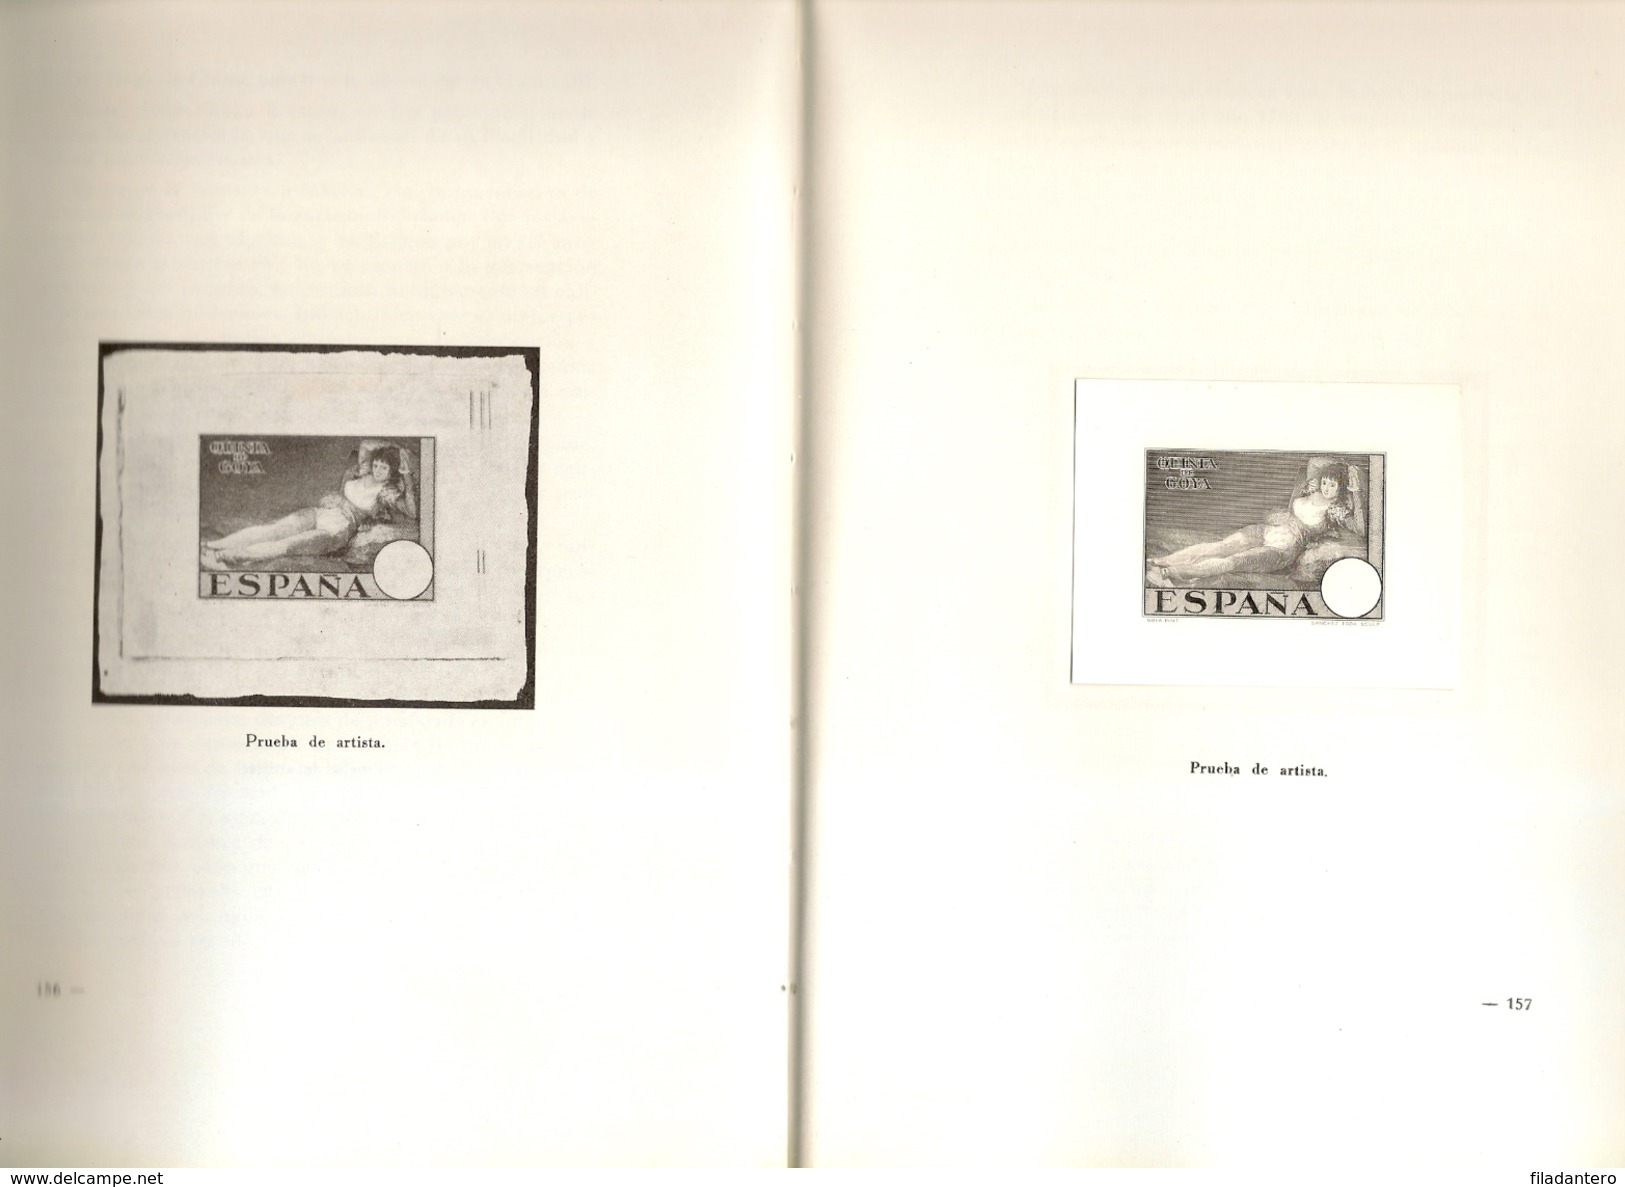 Extraordinaria Obra Del Grabador Sanchez Toda "El Arte De Grabar El Sello"  1969 - Philately And Postal History